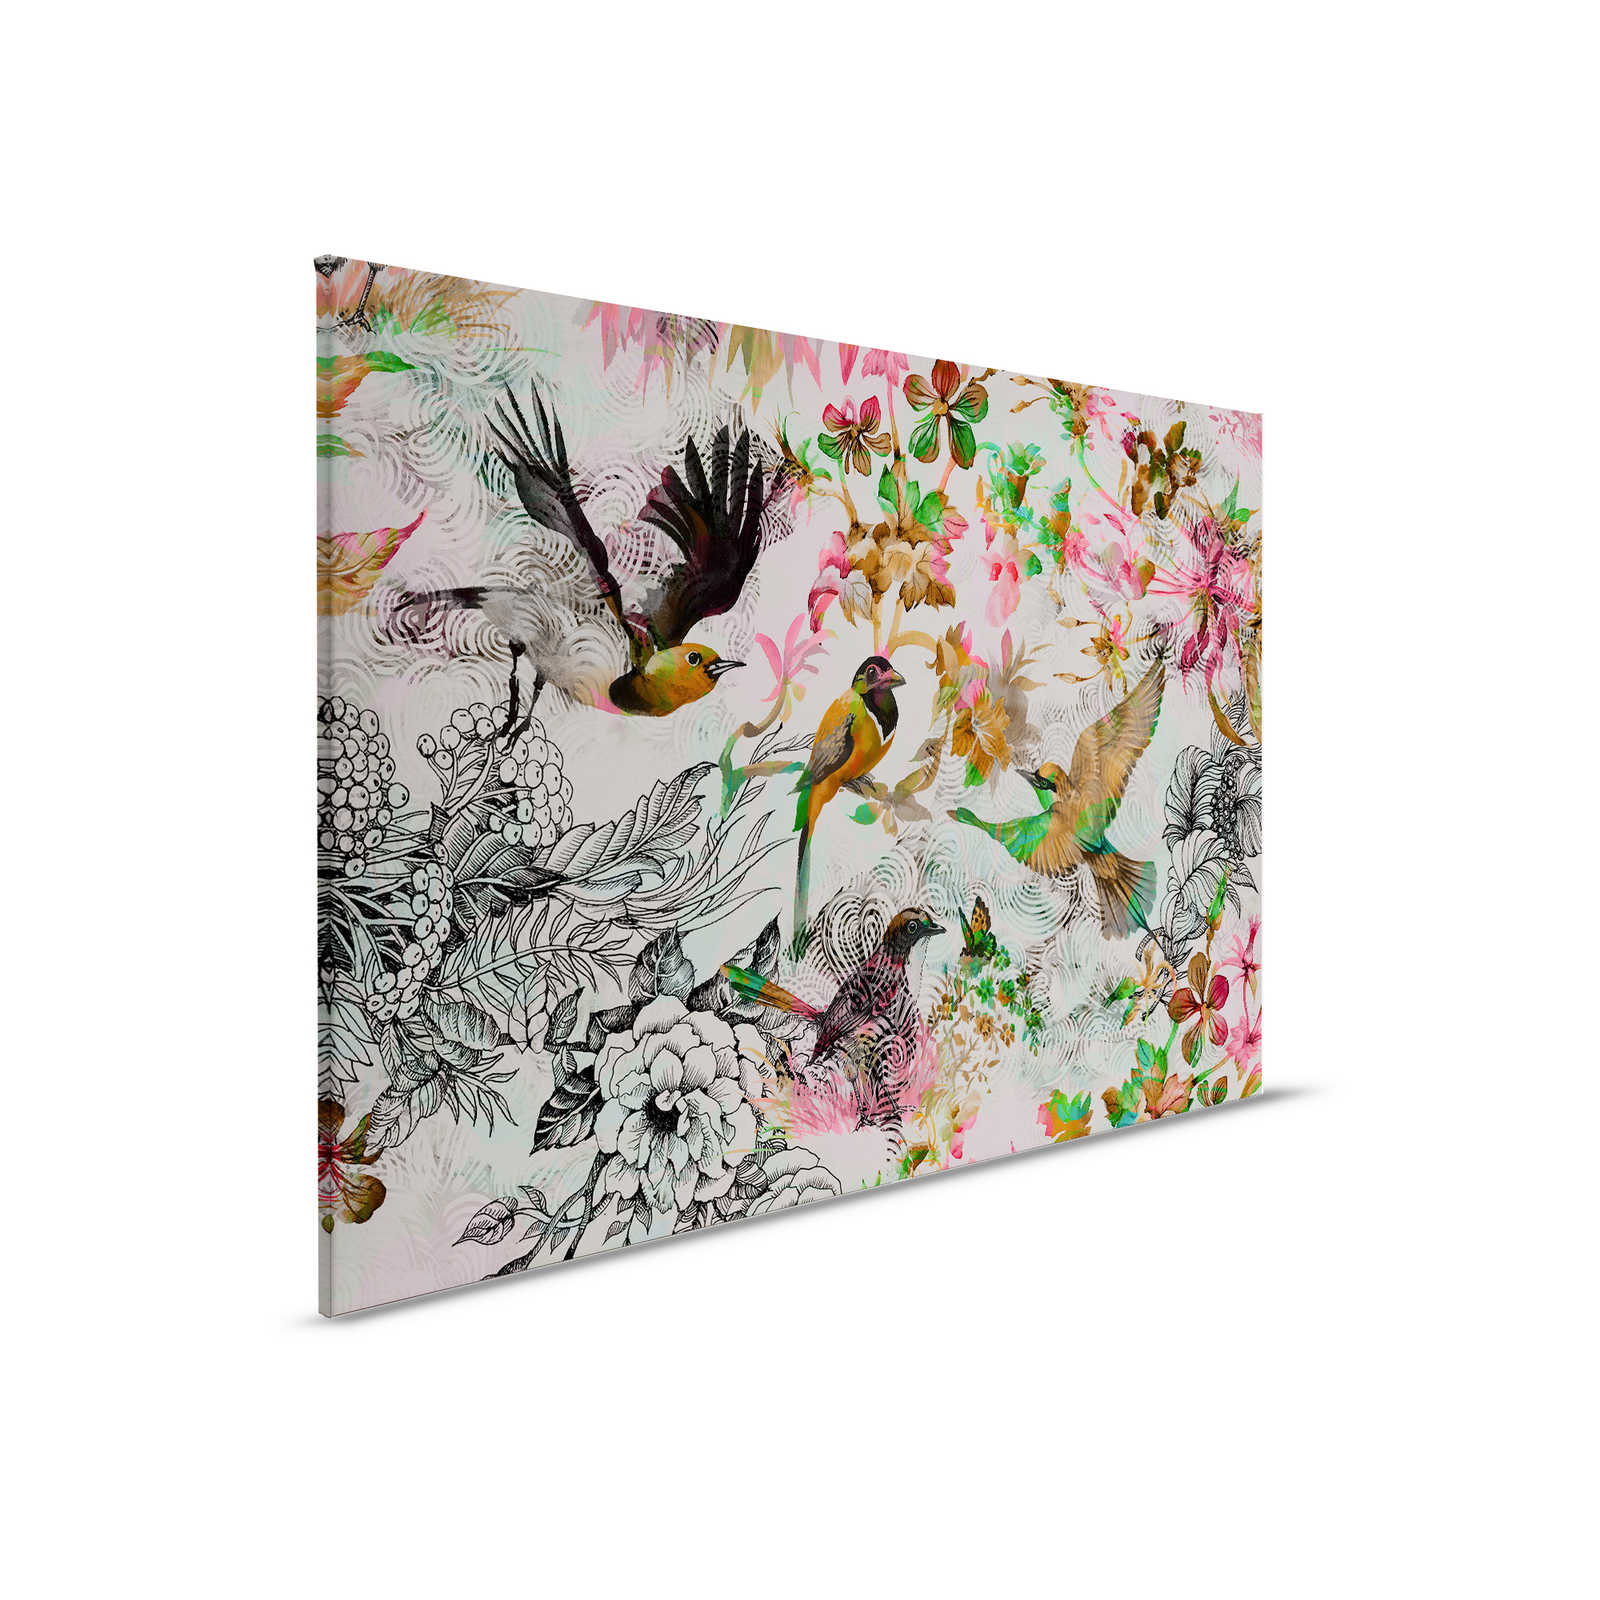 Leinwandbild Vögel & Blumen im Collage Stil – 0,90 m x 0,60 m
